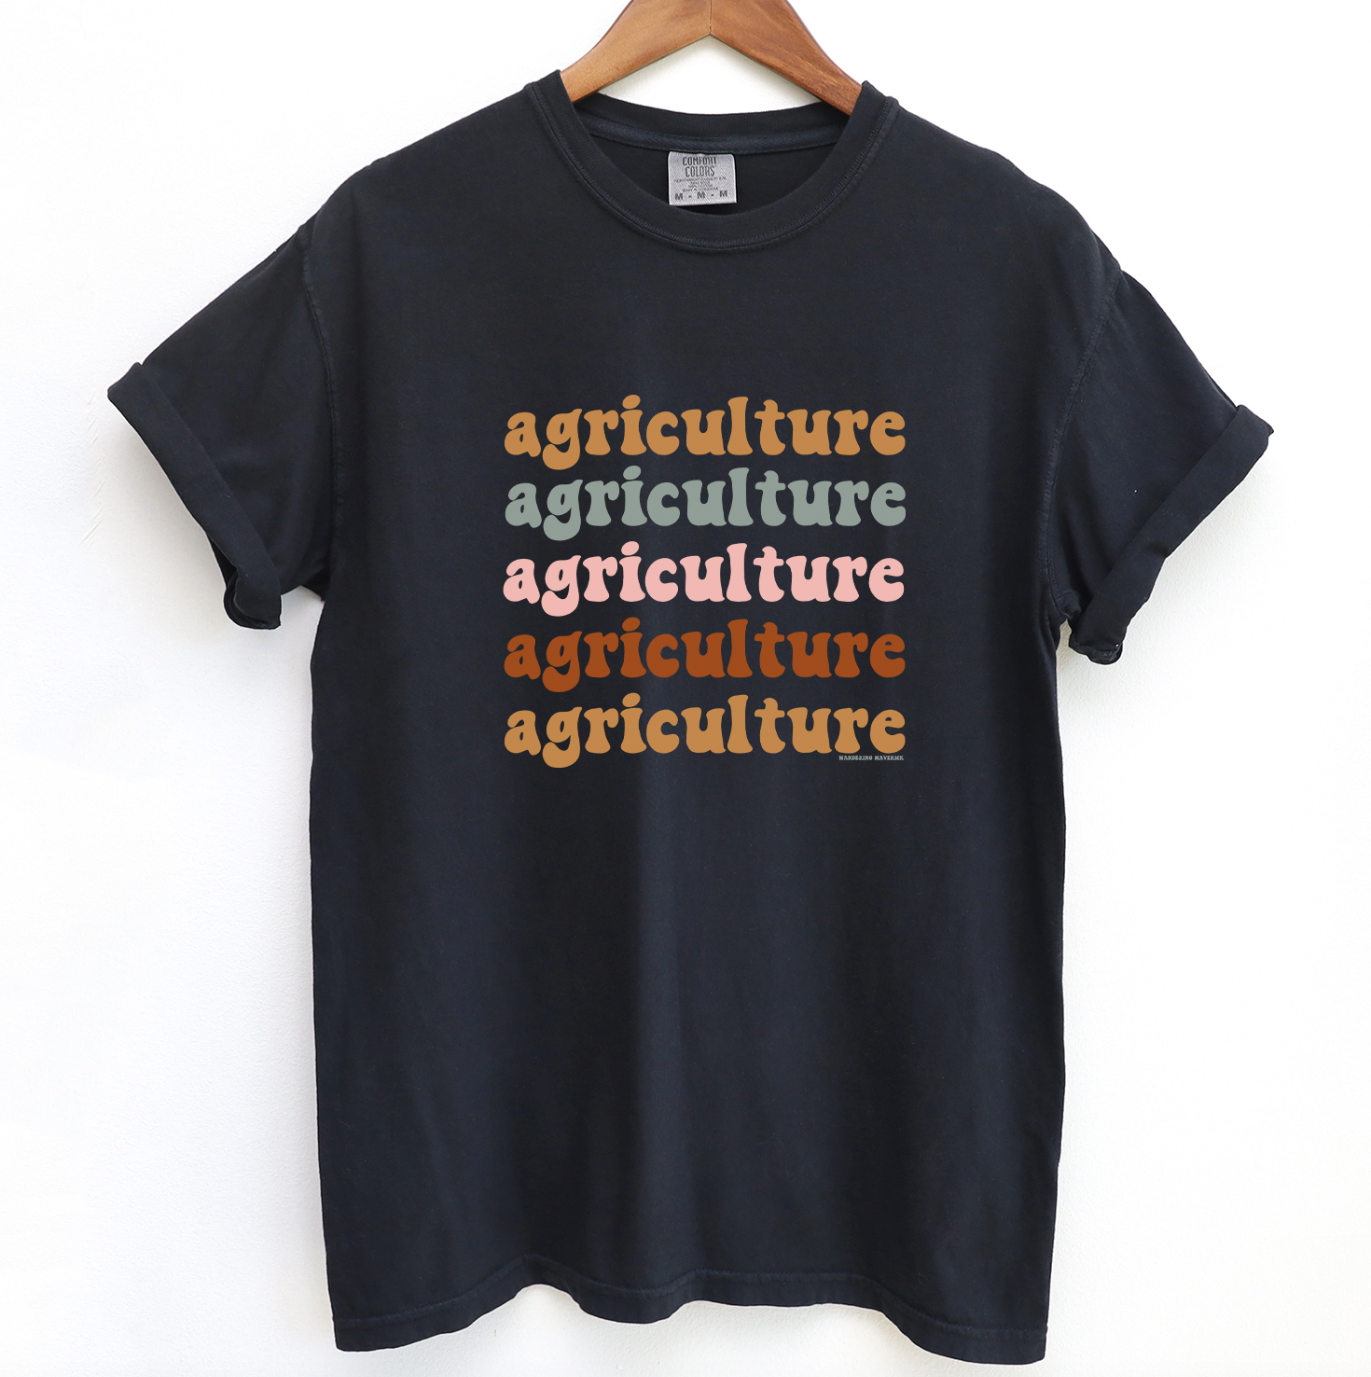 Groovy Agriculture ComfortWash/ComfortColor T-Shirt (S-4XL) - Multiple Colors!